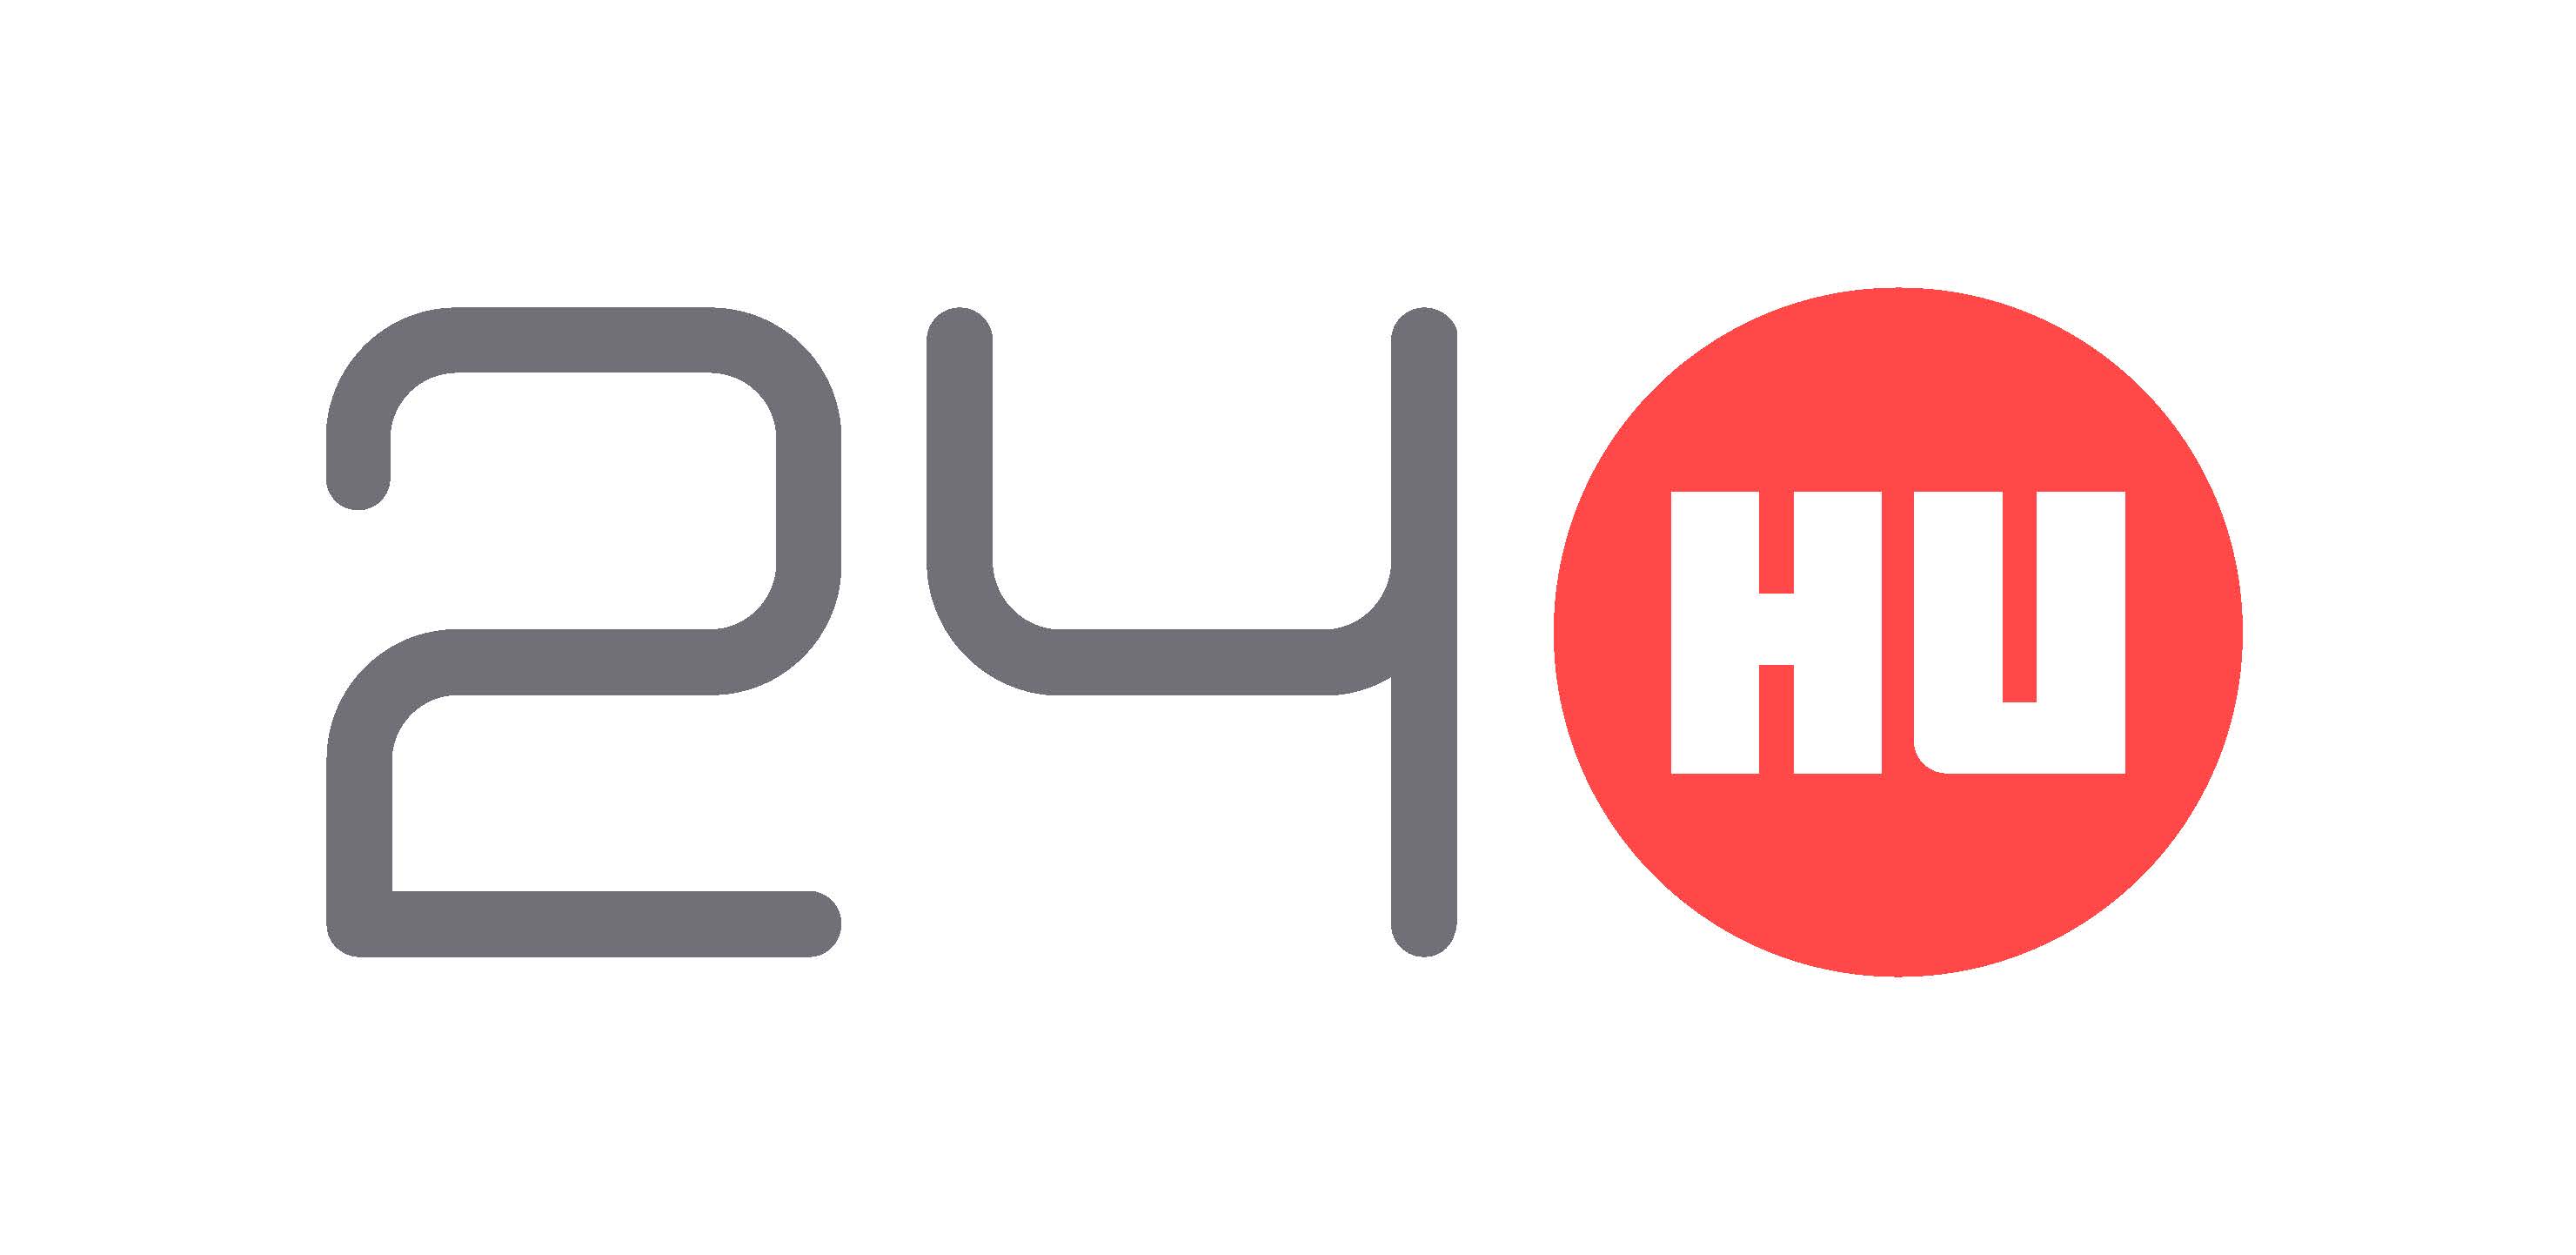 24hu-logo-page-2